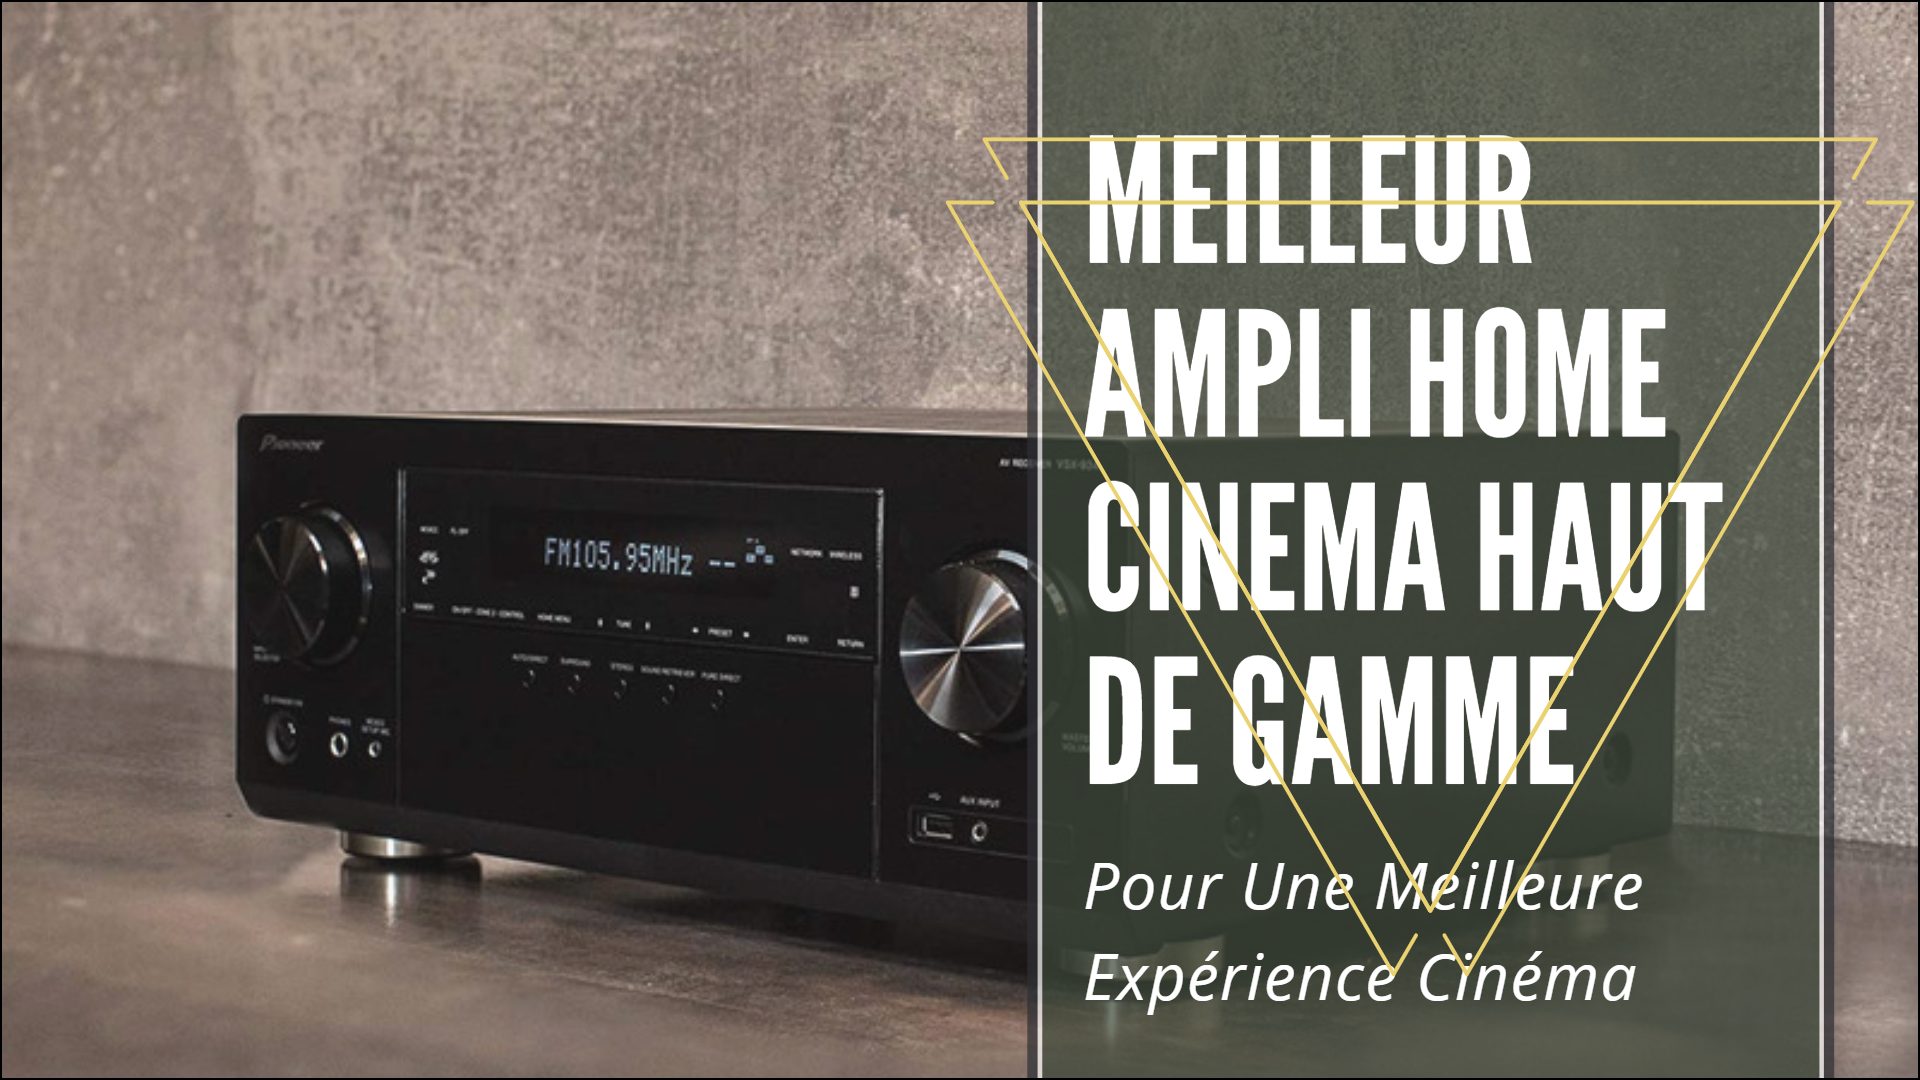 Meilleur Ampli Home Cinema Haut De Gamme